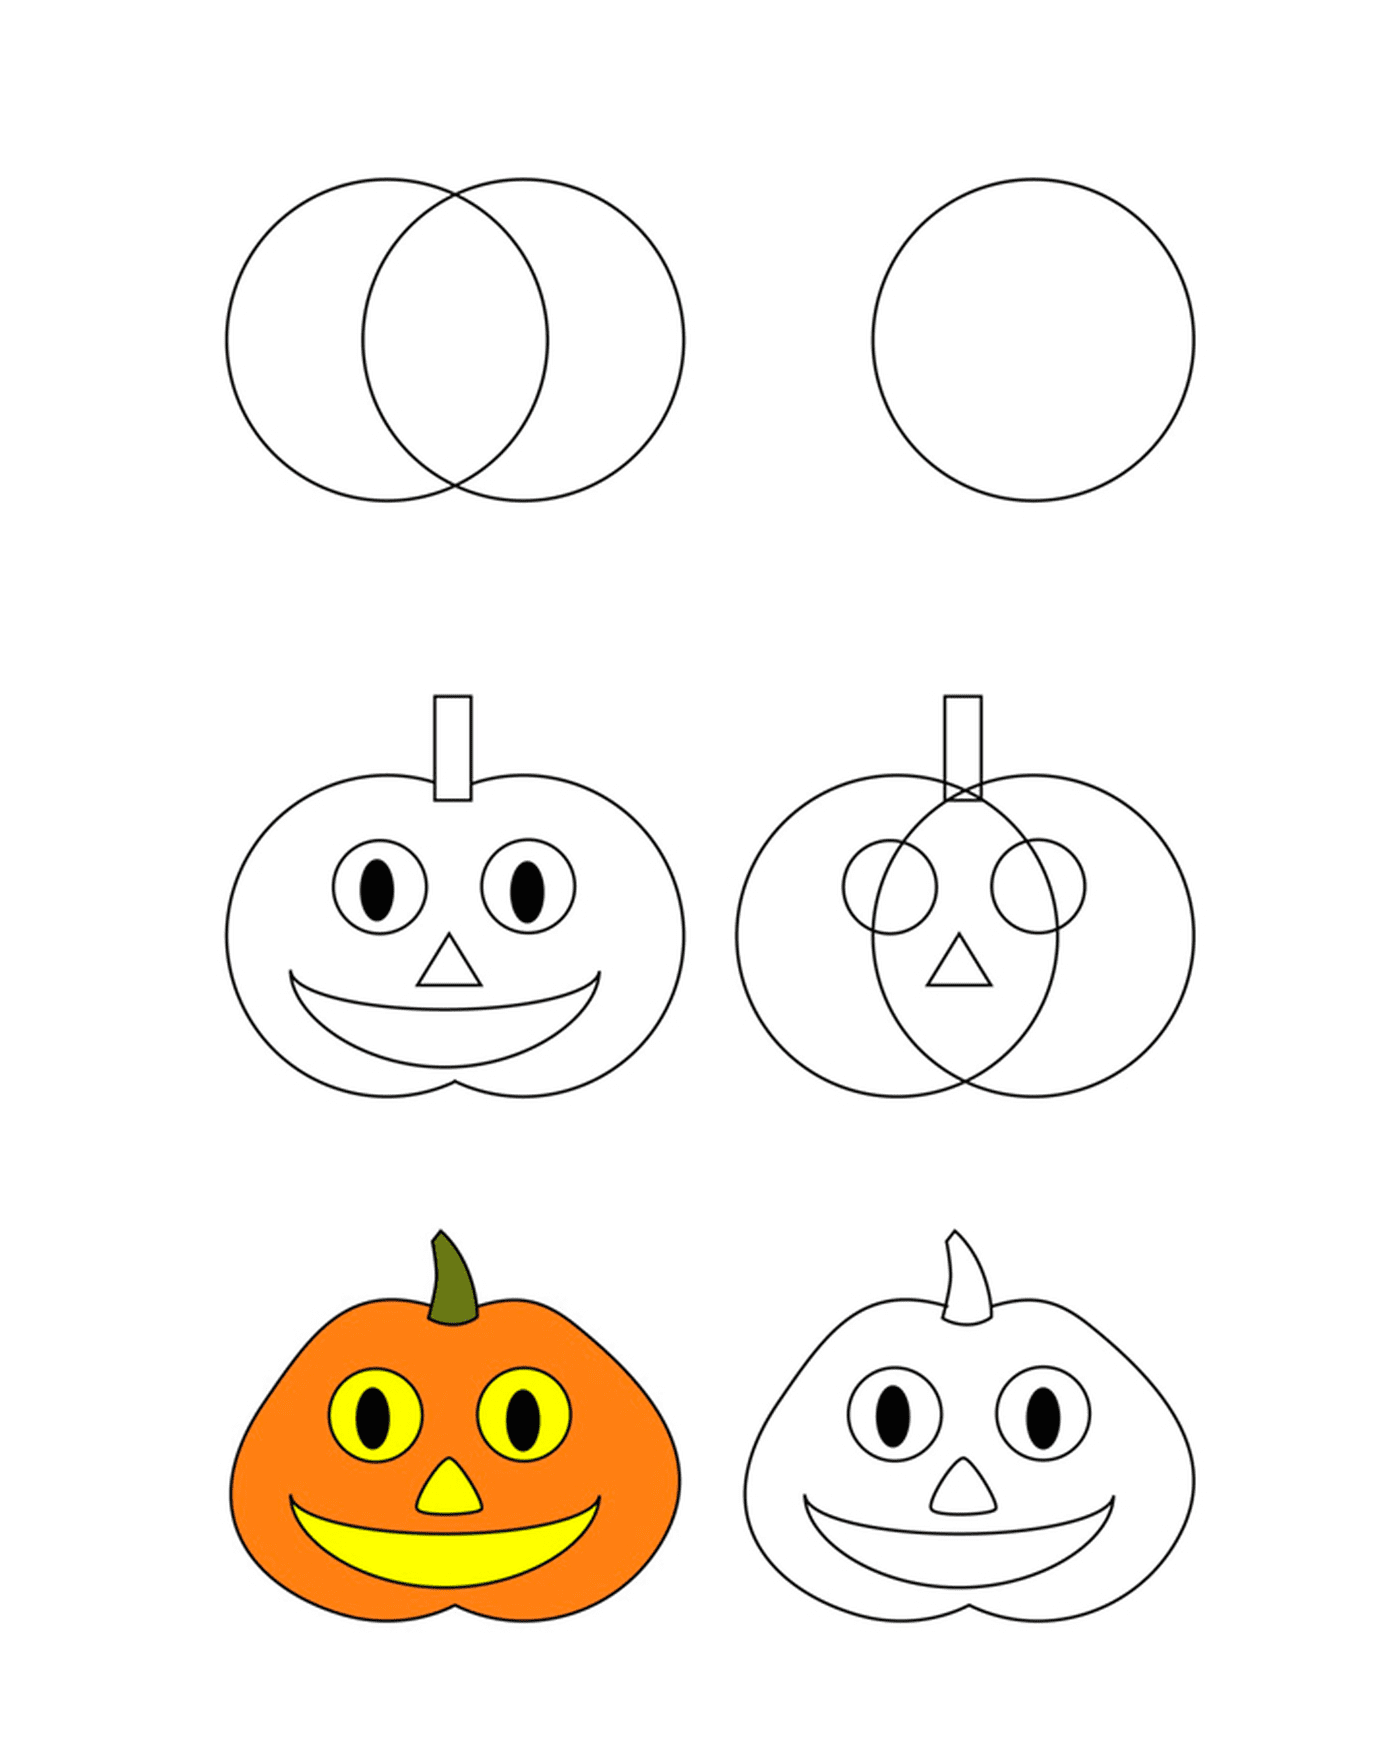  How to draw a Halloween pumpkin 